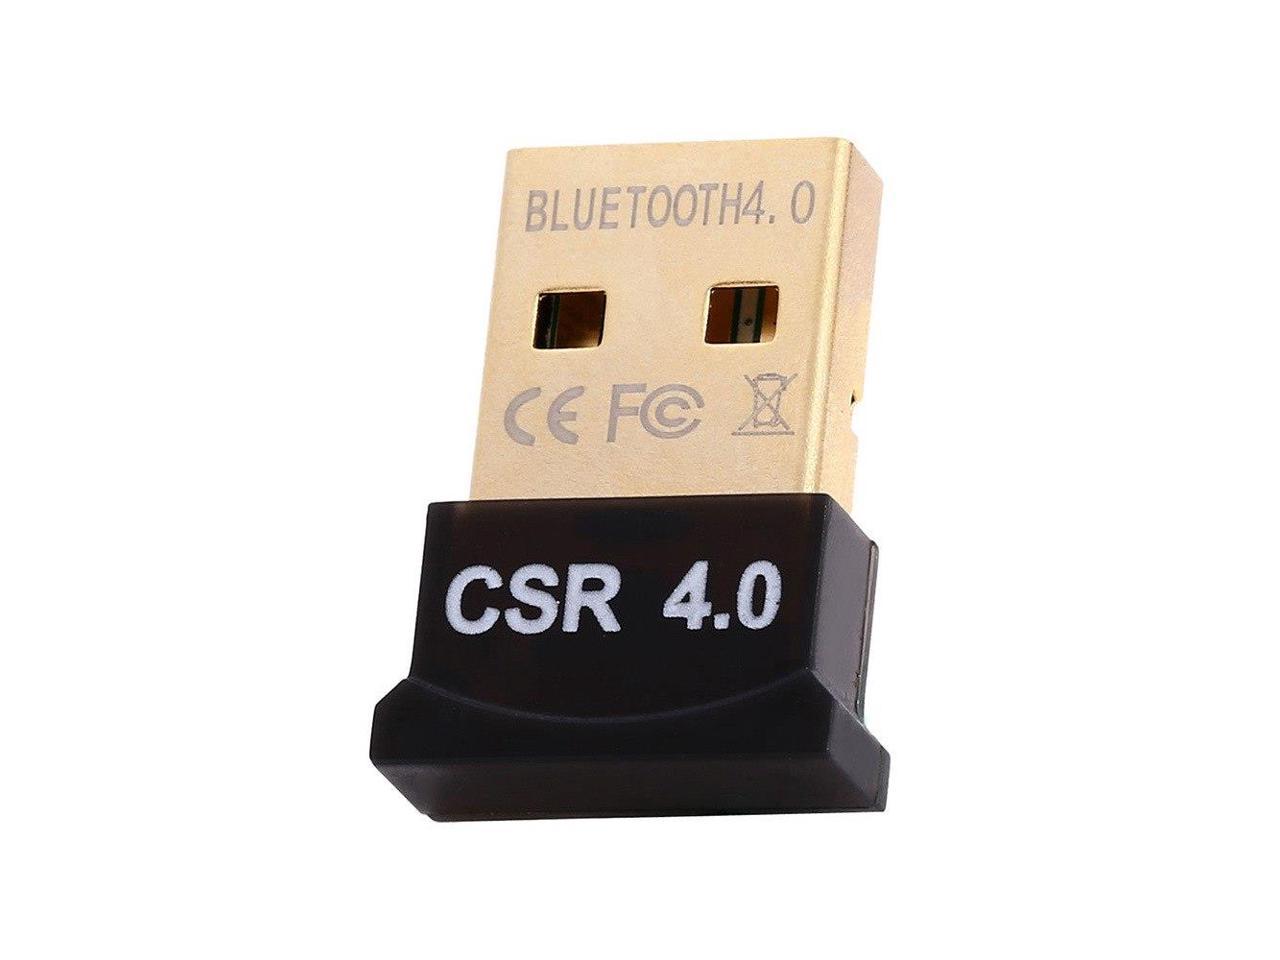 USB Bluetooth V4.0 CSR Wireless Dongle Adapter for Windows 7 8 10 PC Laptop New 